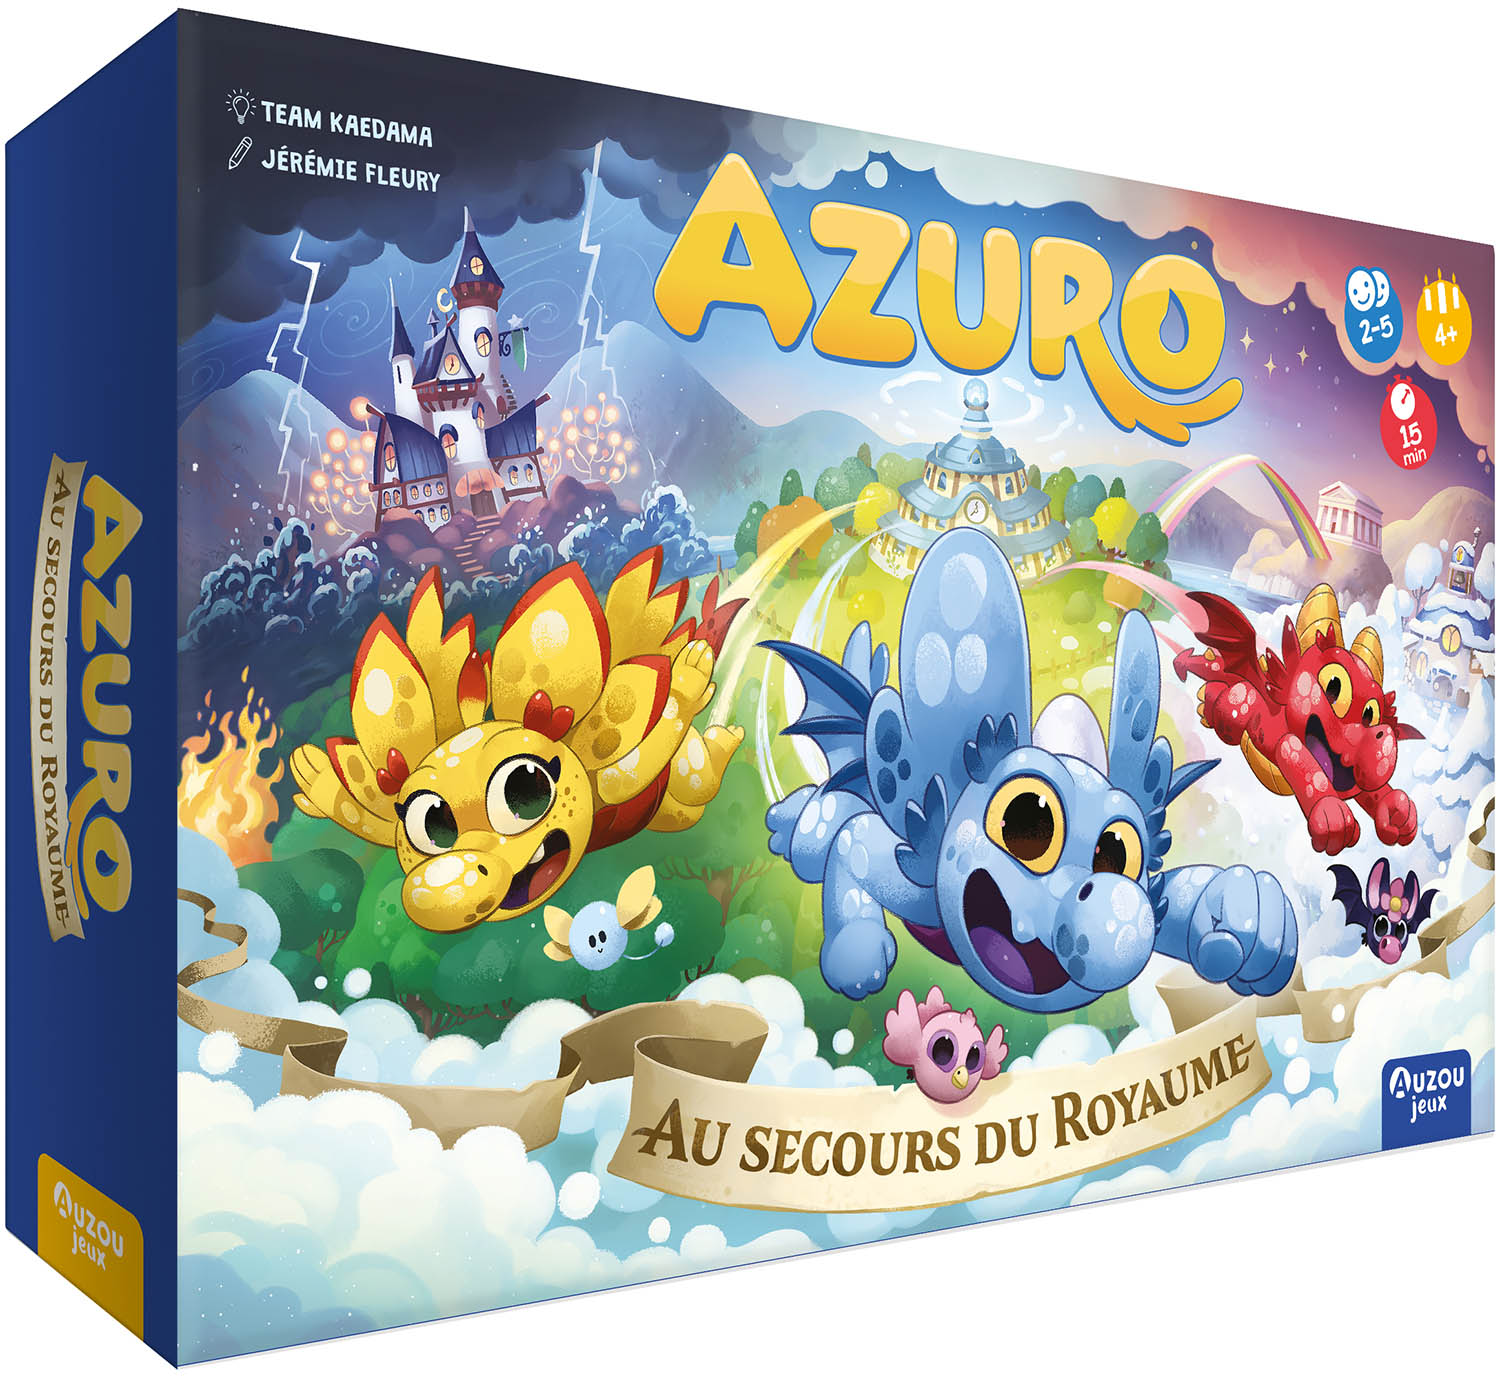 Azuro's Big Game - Save The Kingdom